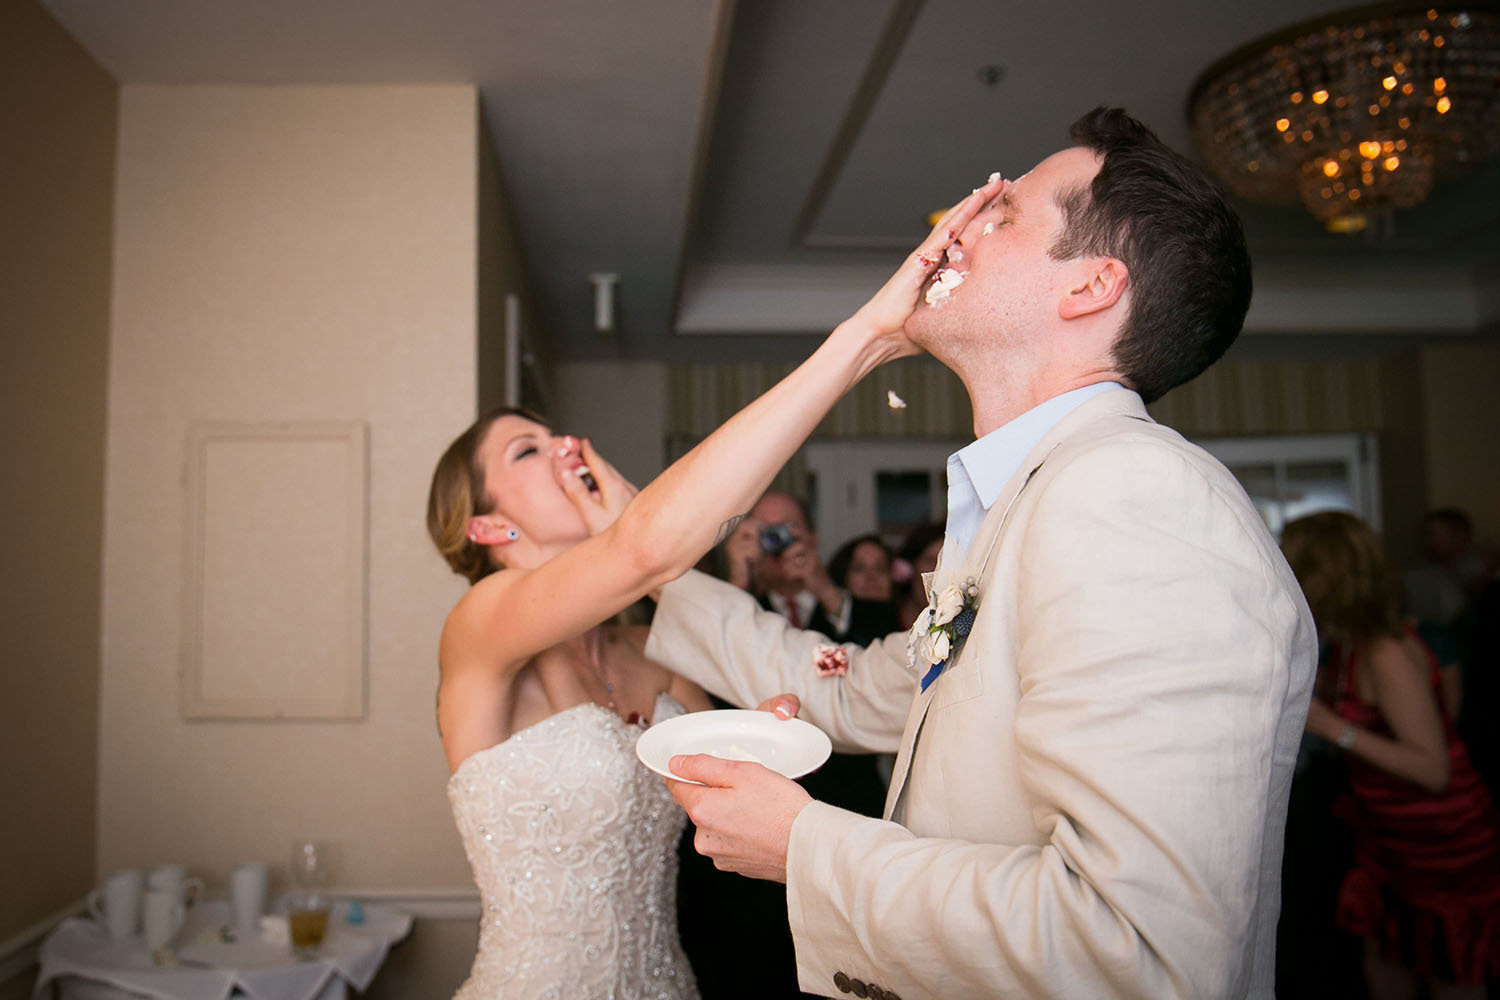 Cake smash at the wedding reception | L'Auberge Del Mar